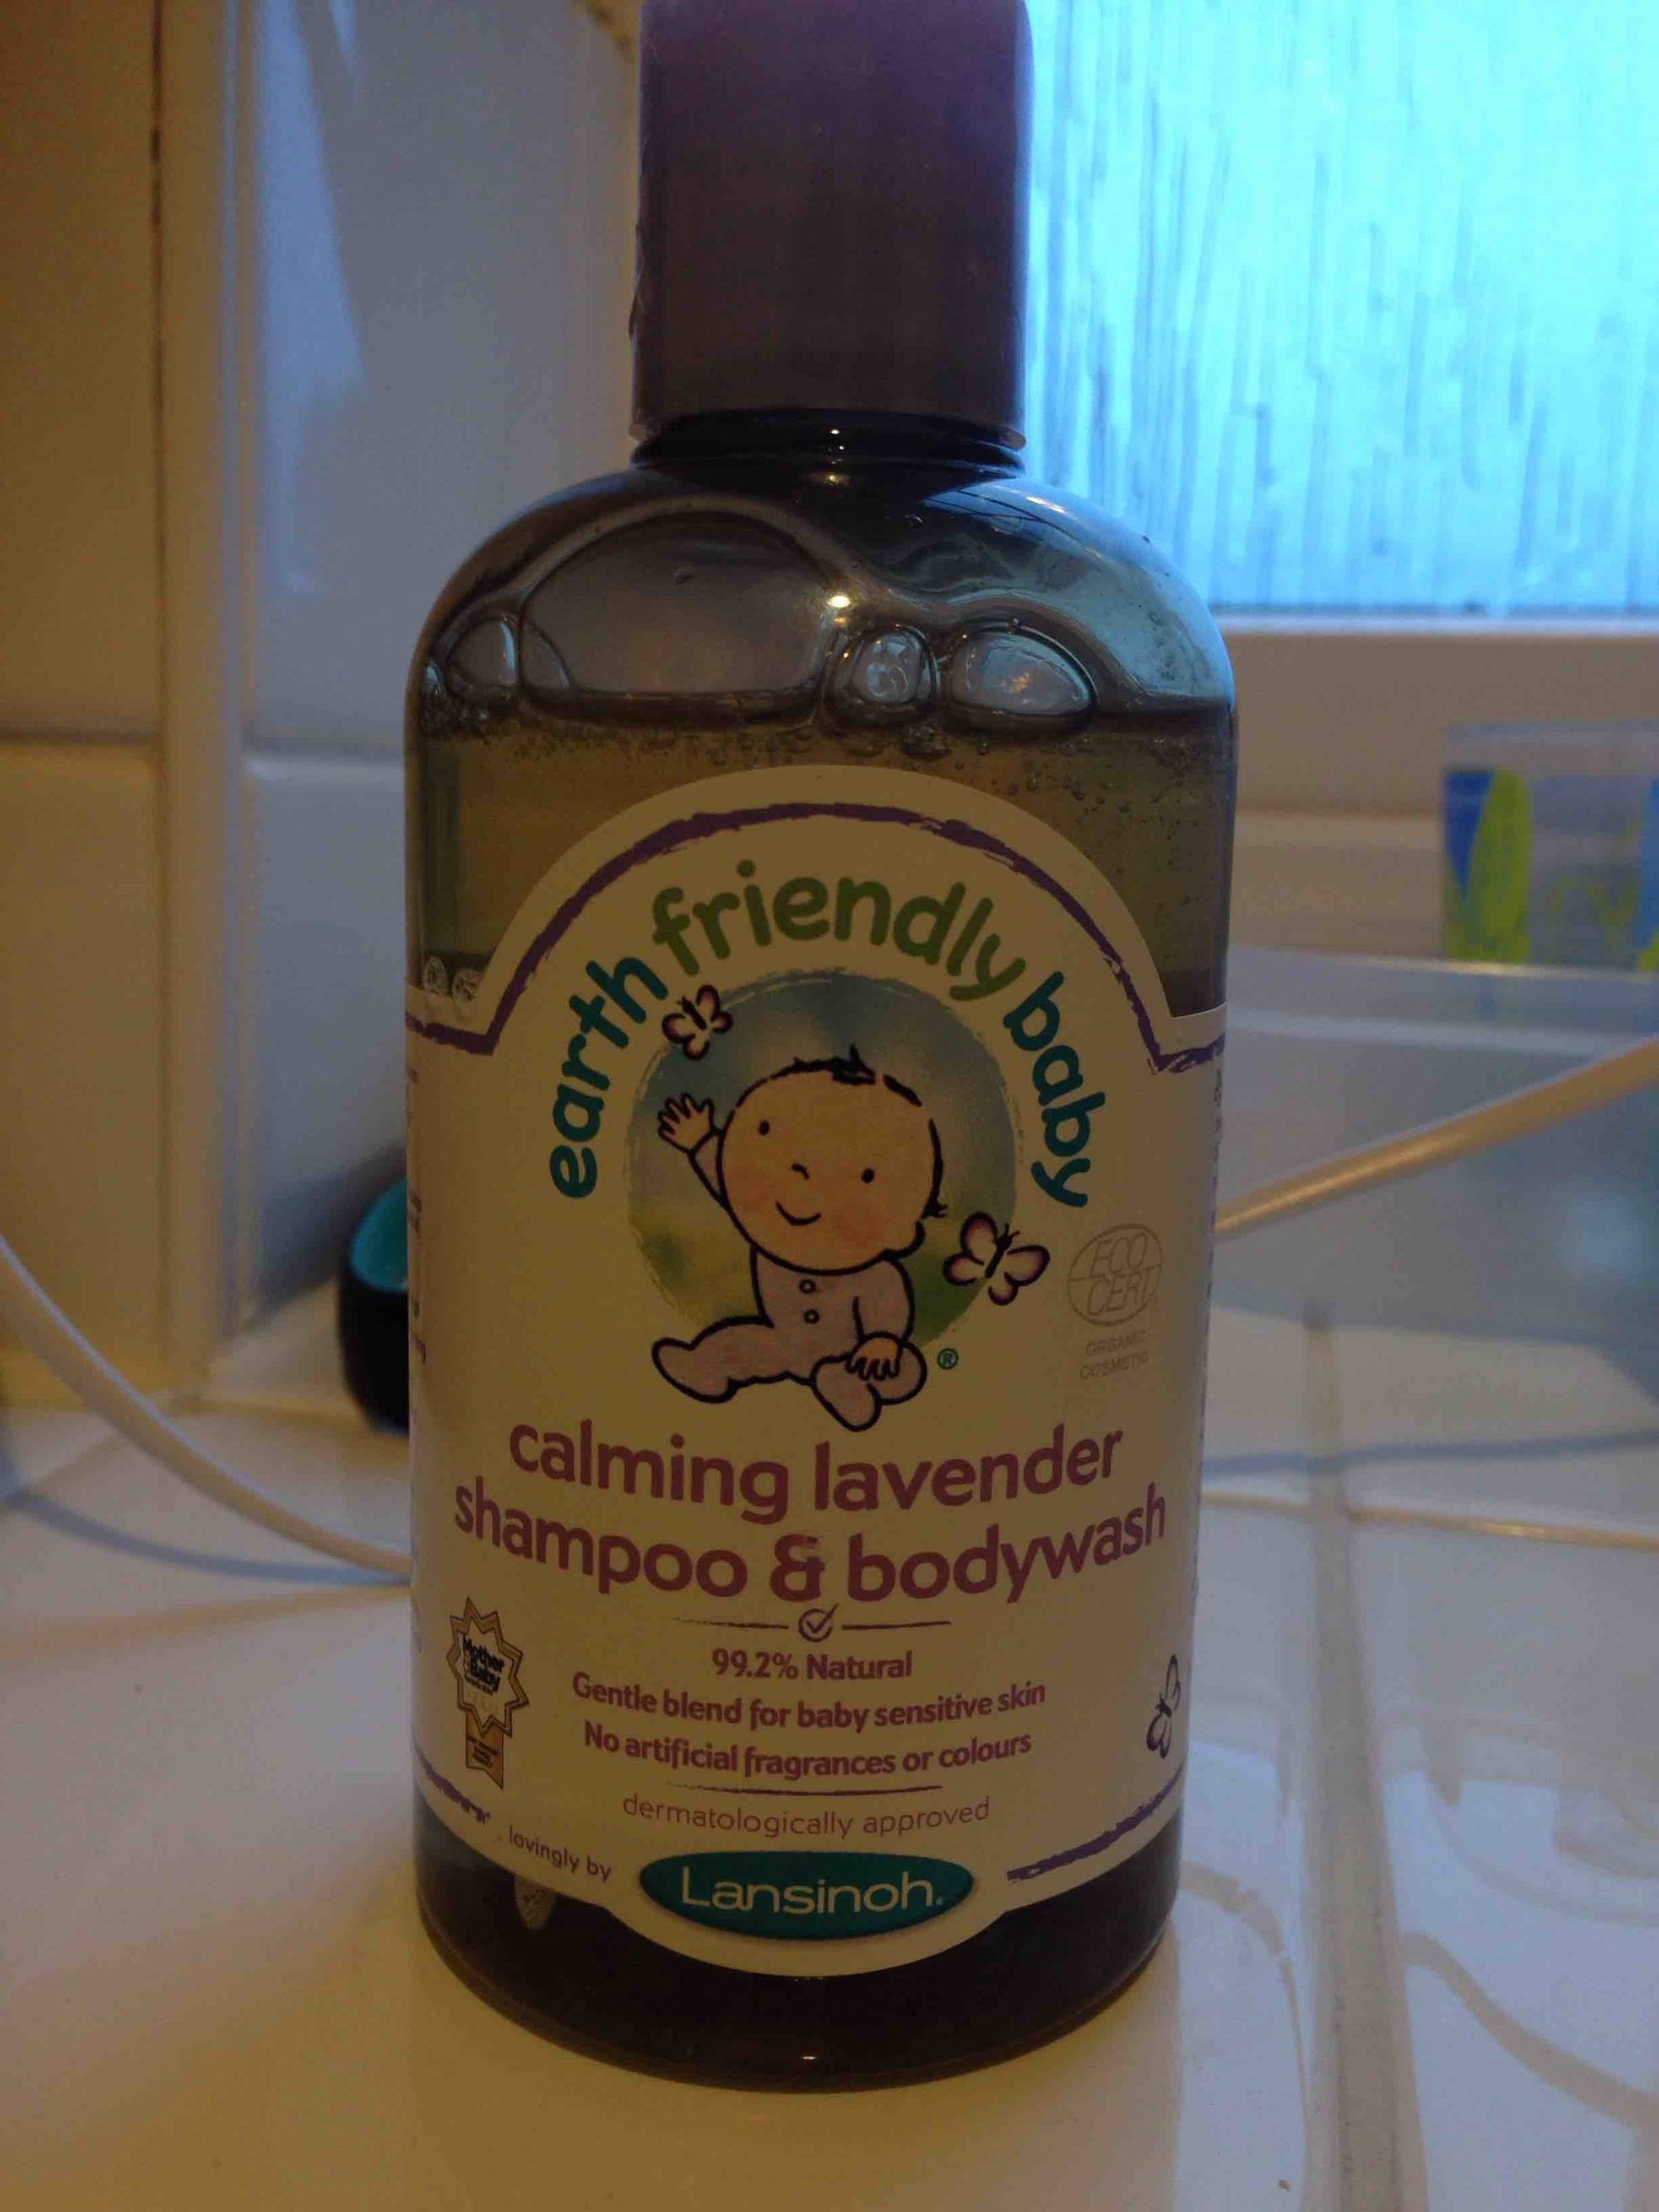 LANSINOH - Earth friendly baby - Calming lavender shampoo & bodywash